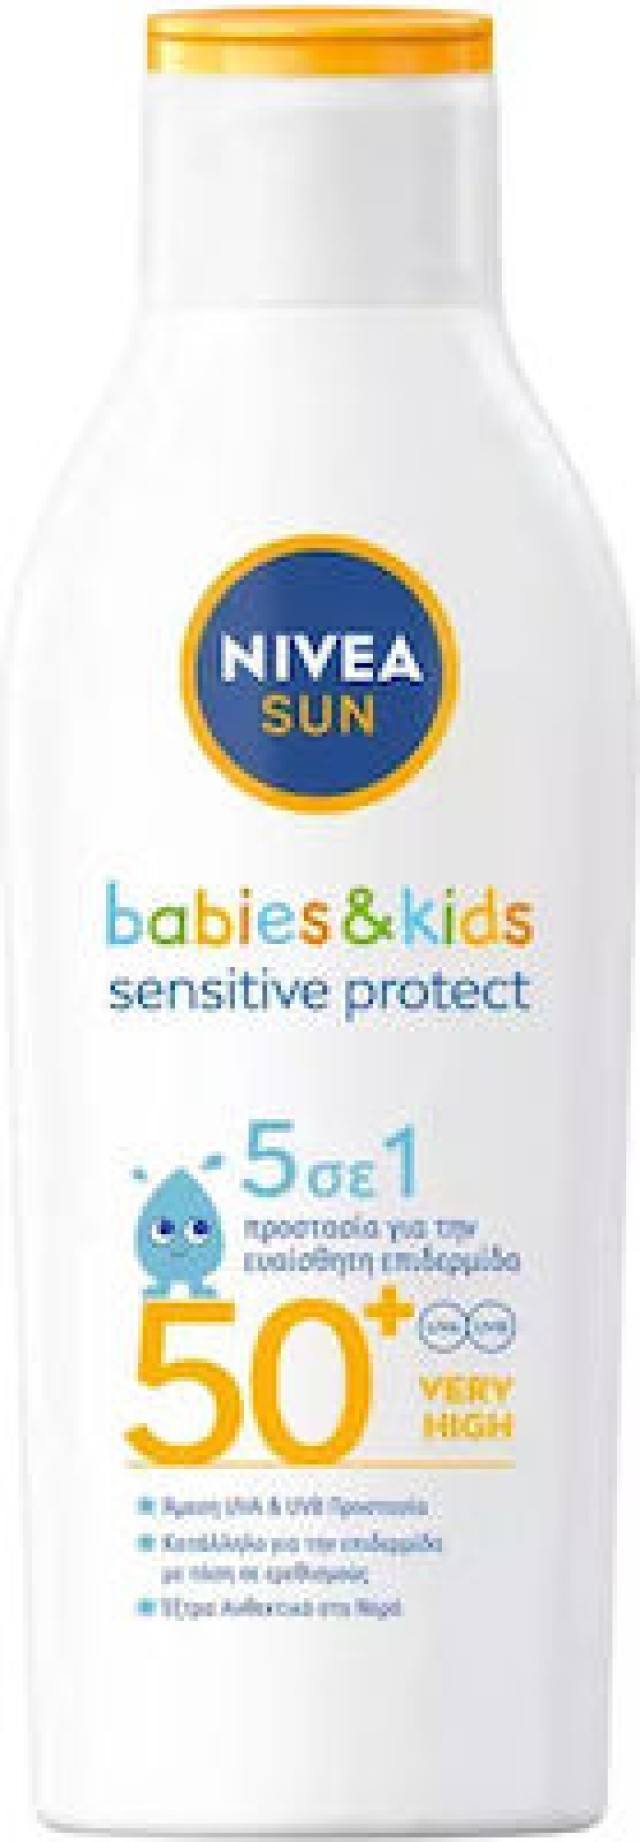 Nivea Sun Babies & Kids Sensitive Protect Lotion SPF50+ Παιδική Αντιηλιακή Λοσιόν 5 σε 1, 200ml